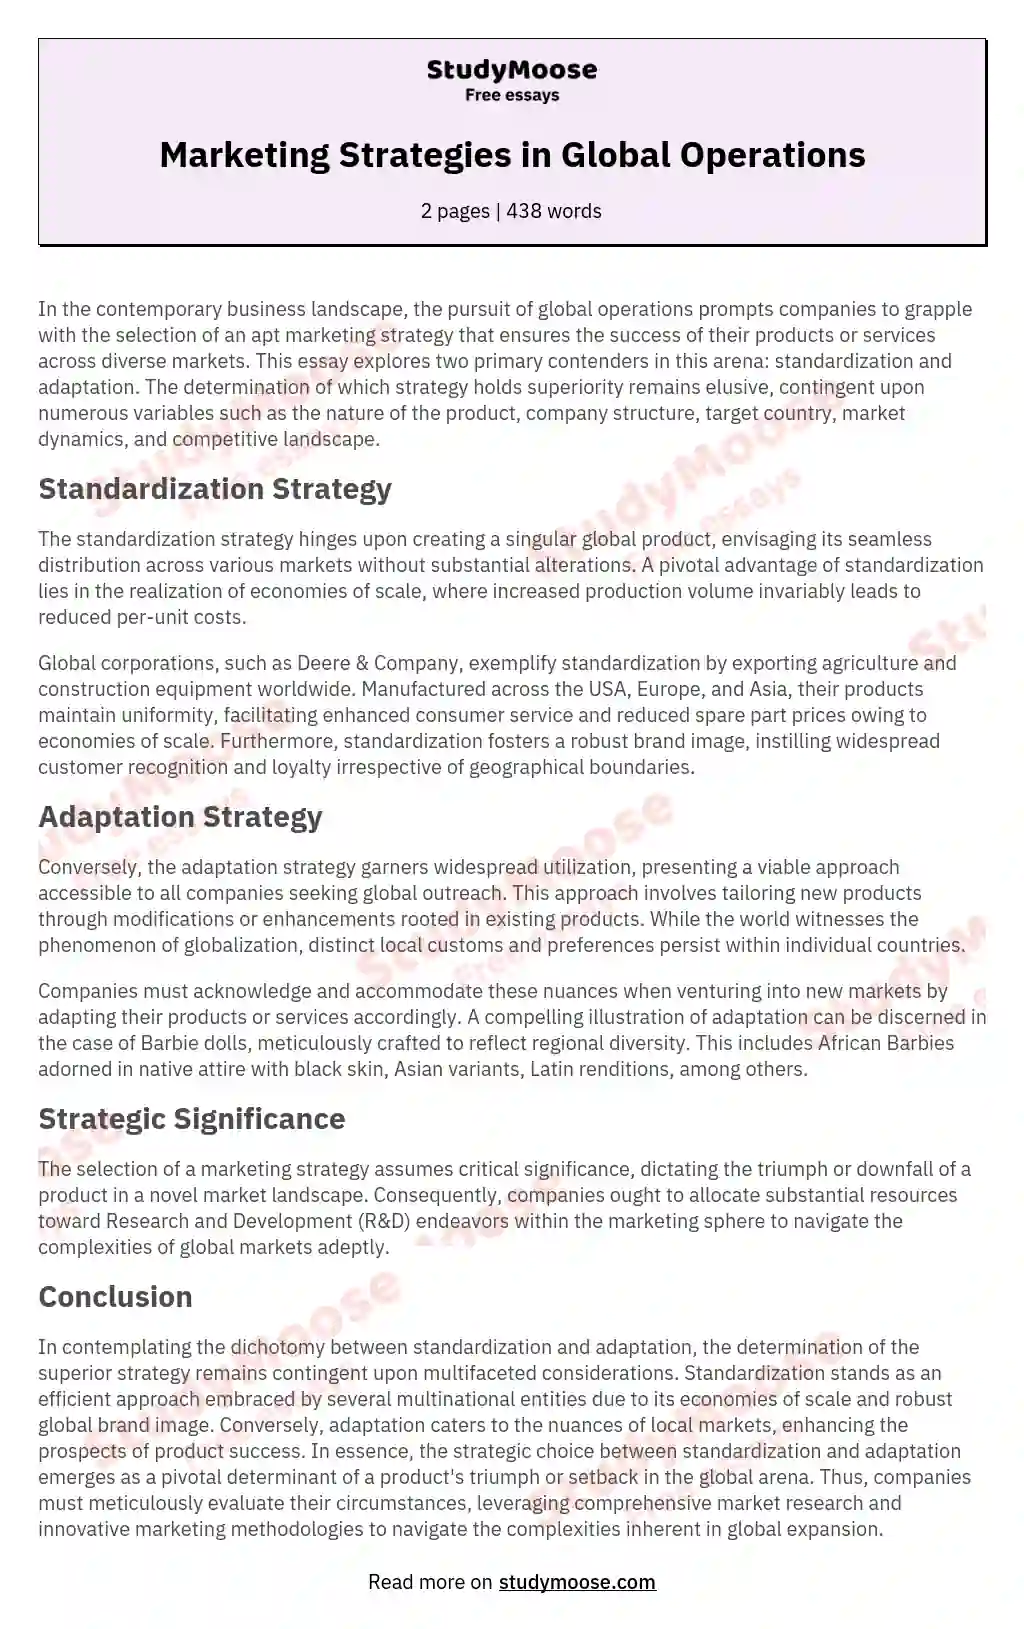 Marketing Strategies in Global Operations essay